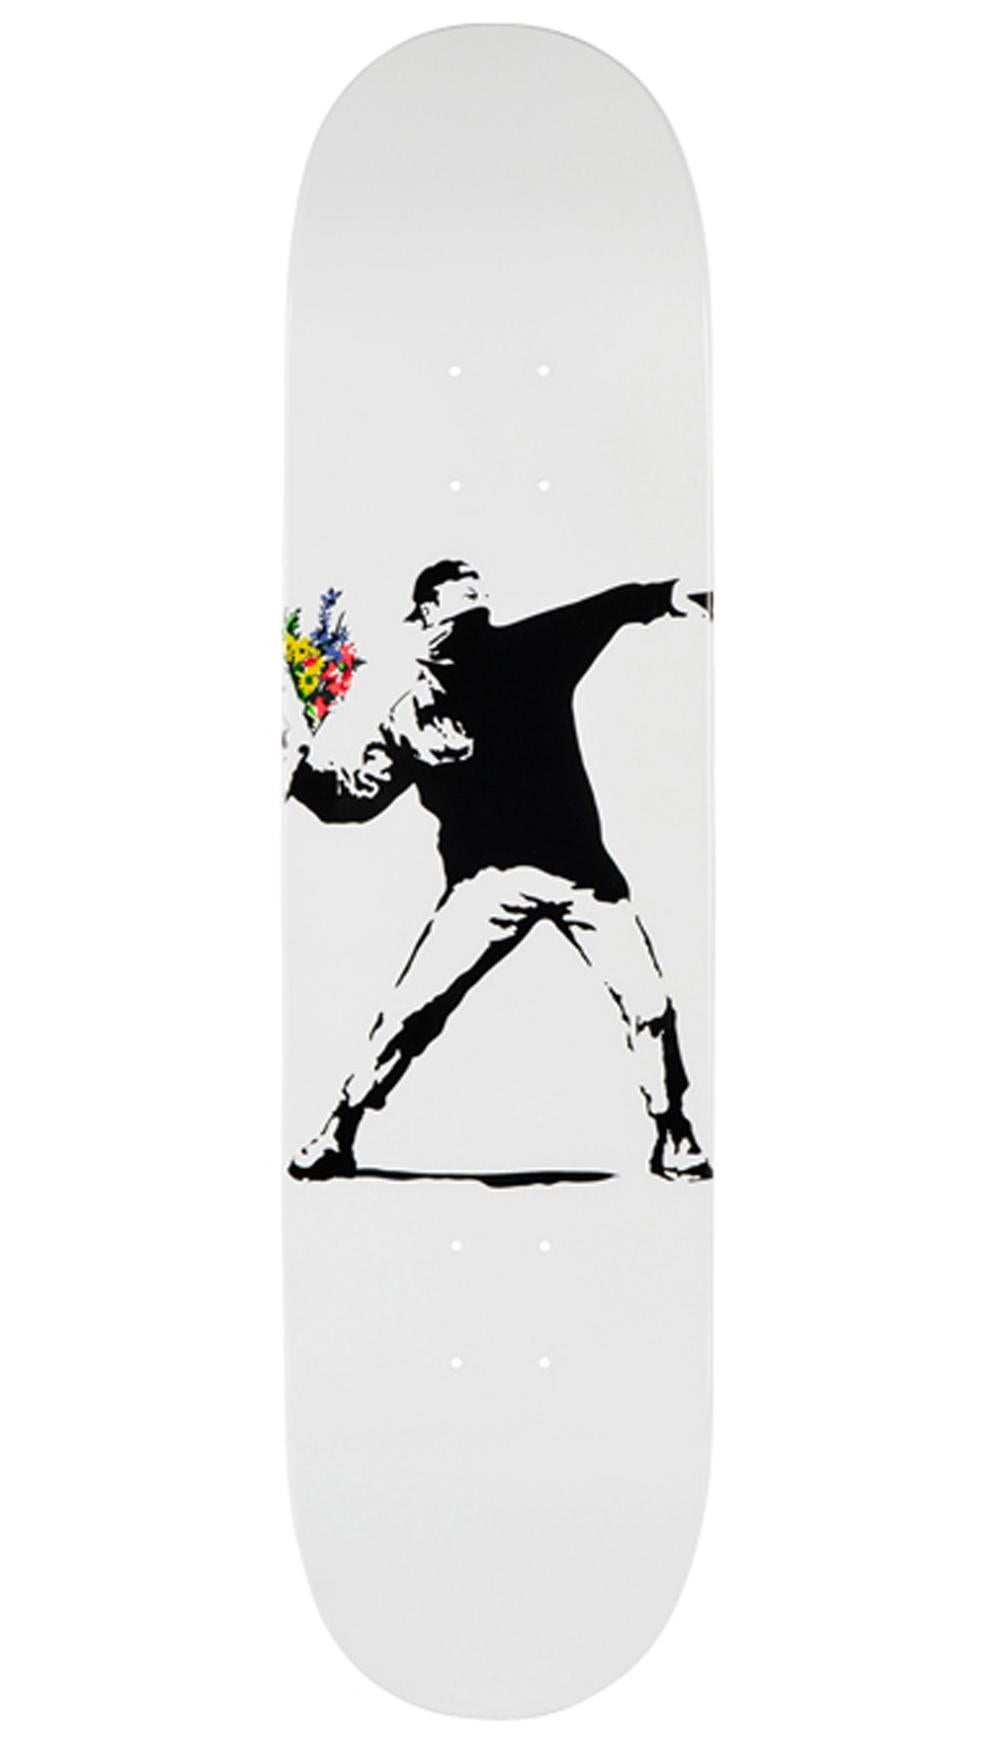 Flower Thrower skateboard deck - Print by Banksy